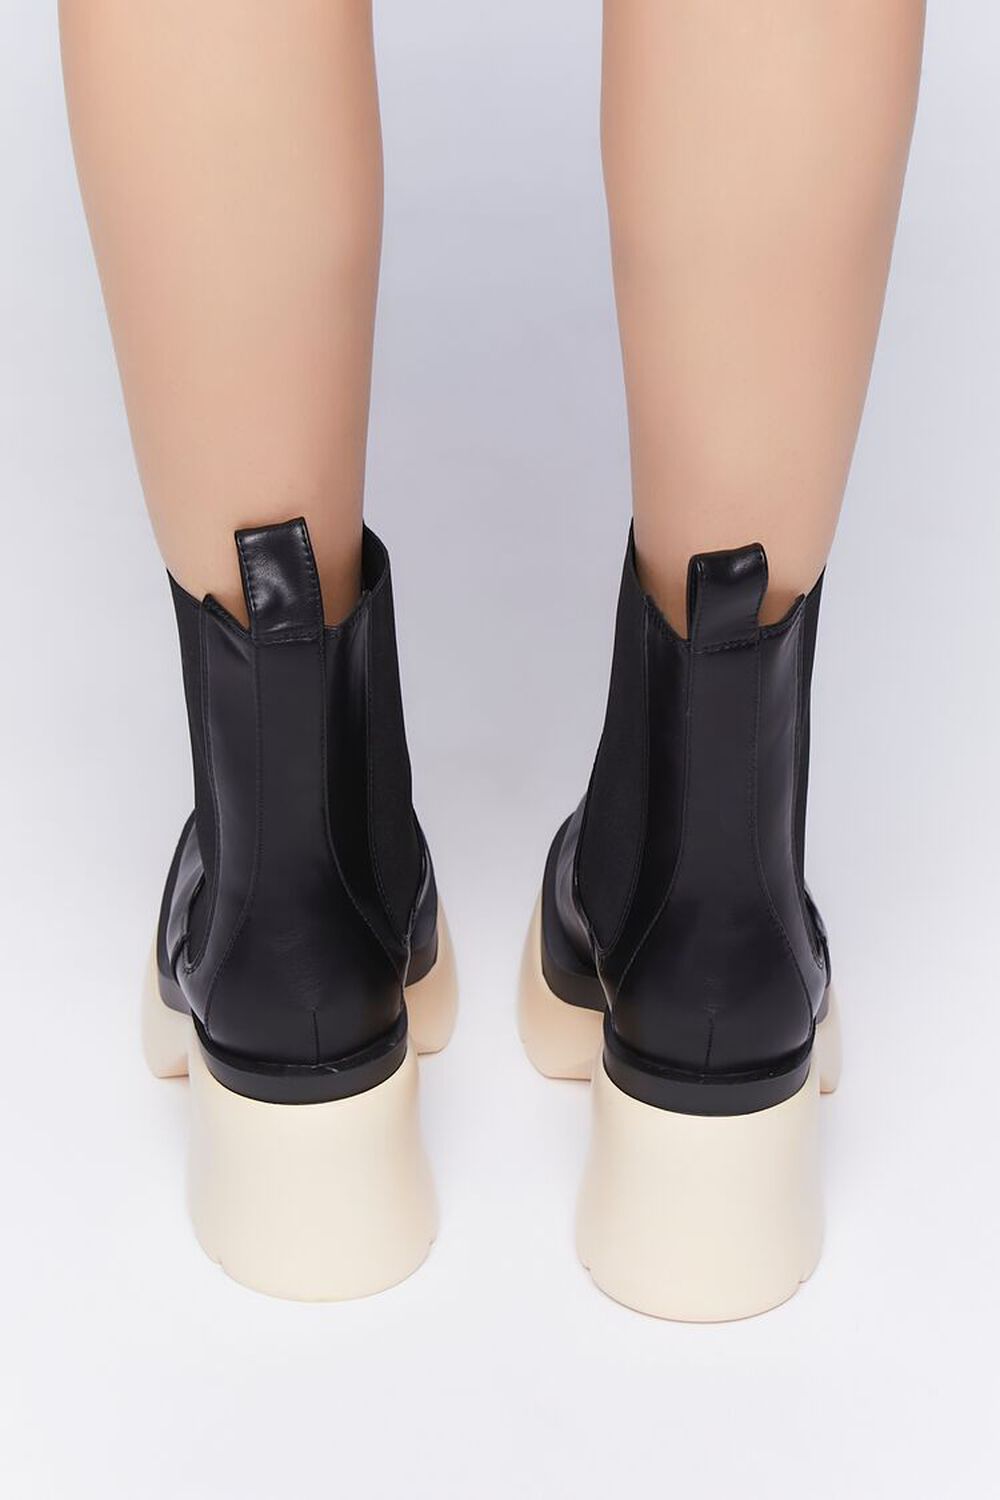 BLACK/CREAM Lug-Sole Chelsea Boots, image 3